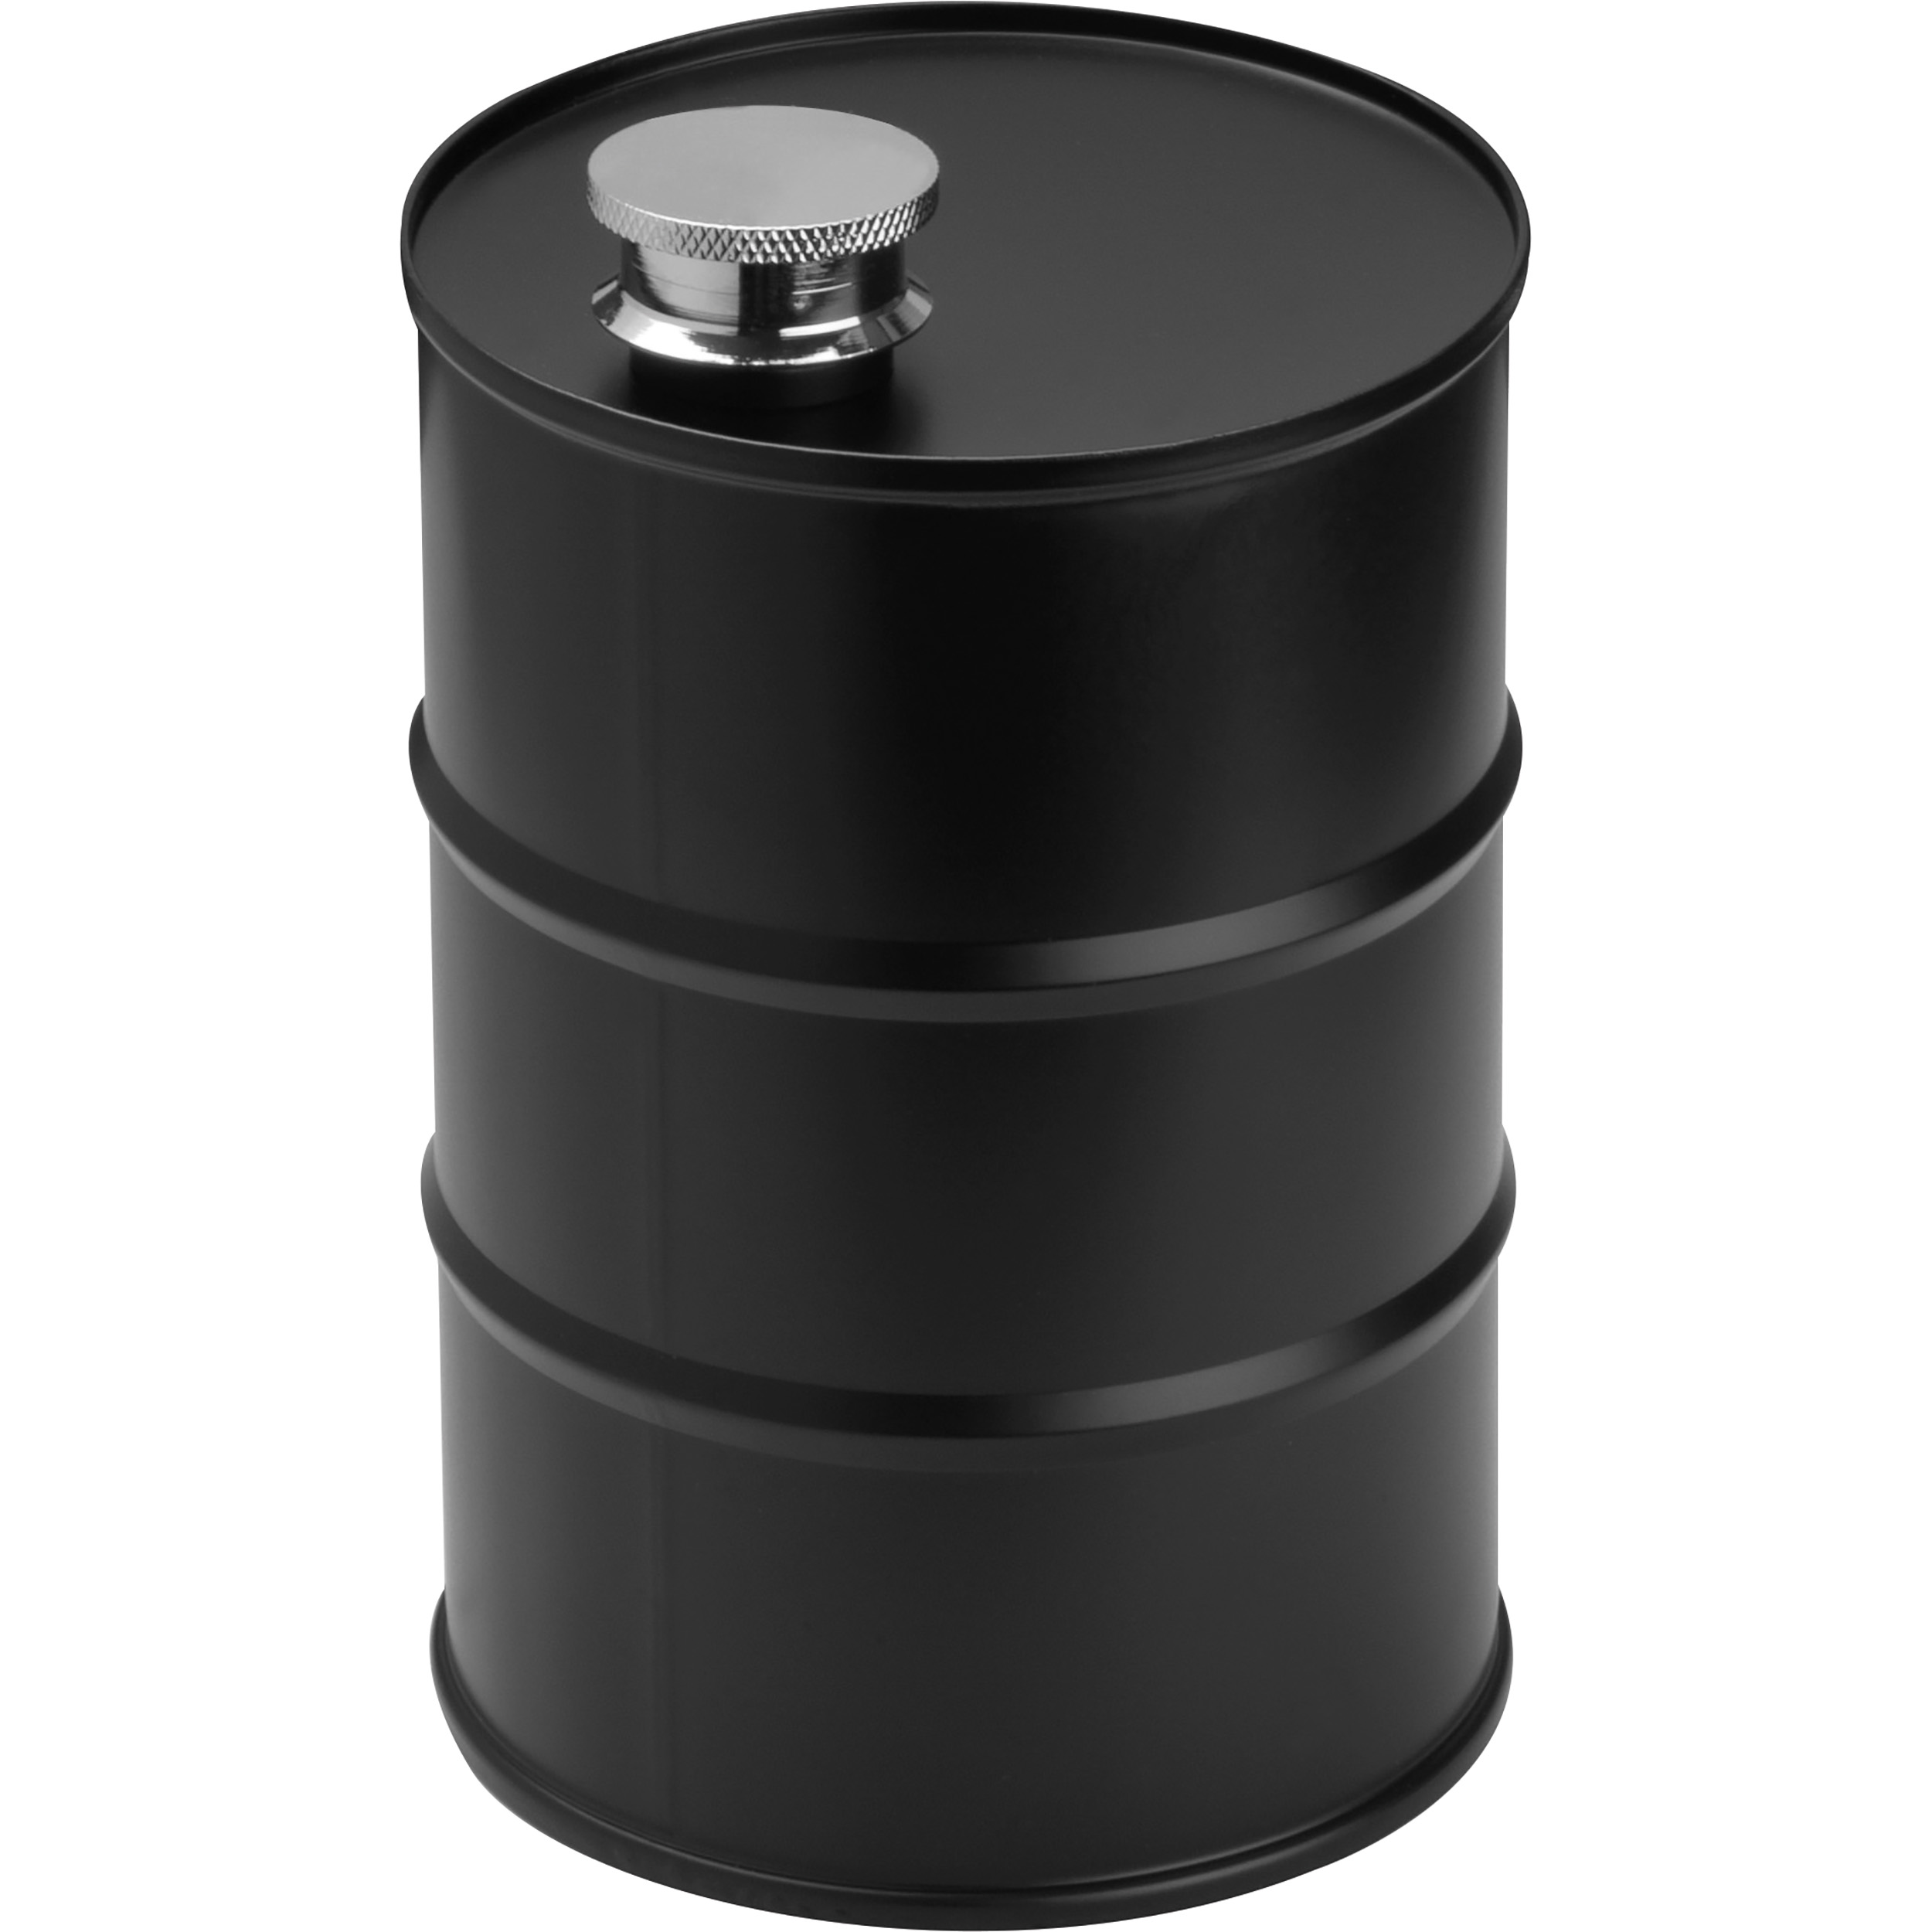 Hip flask barrel